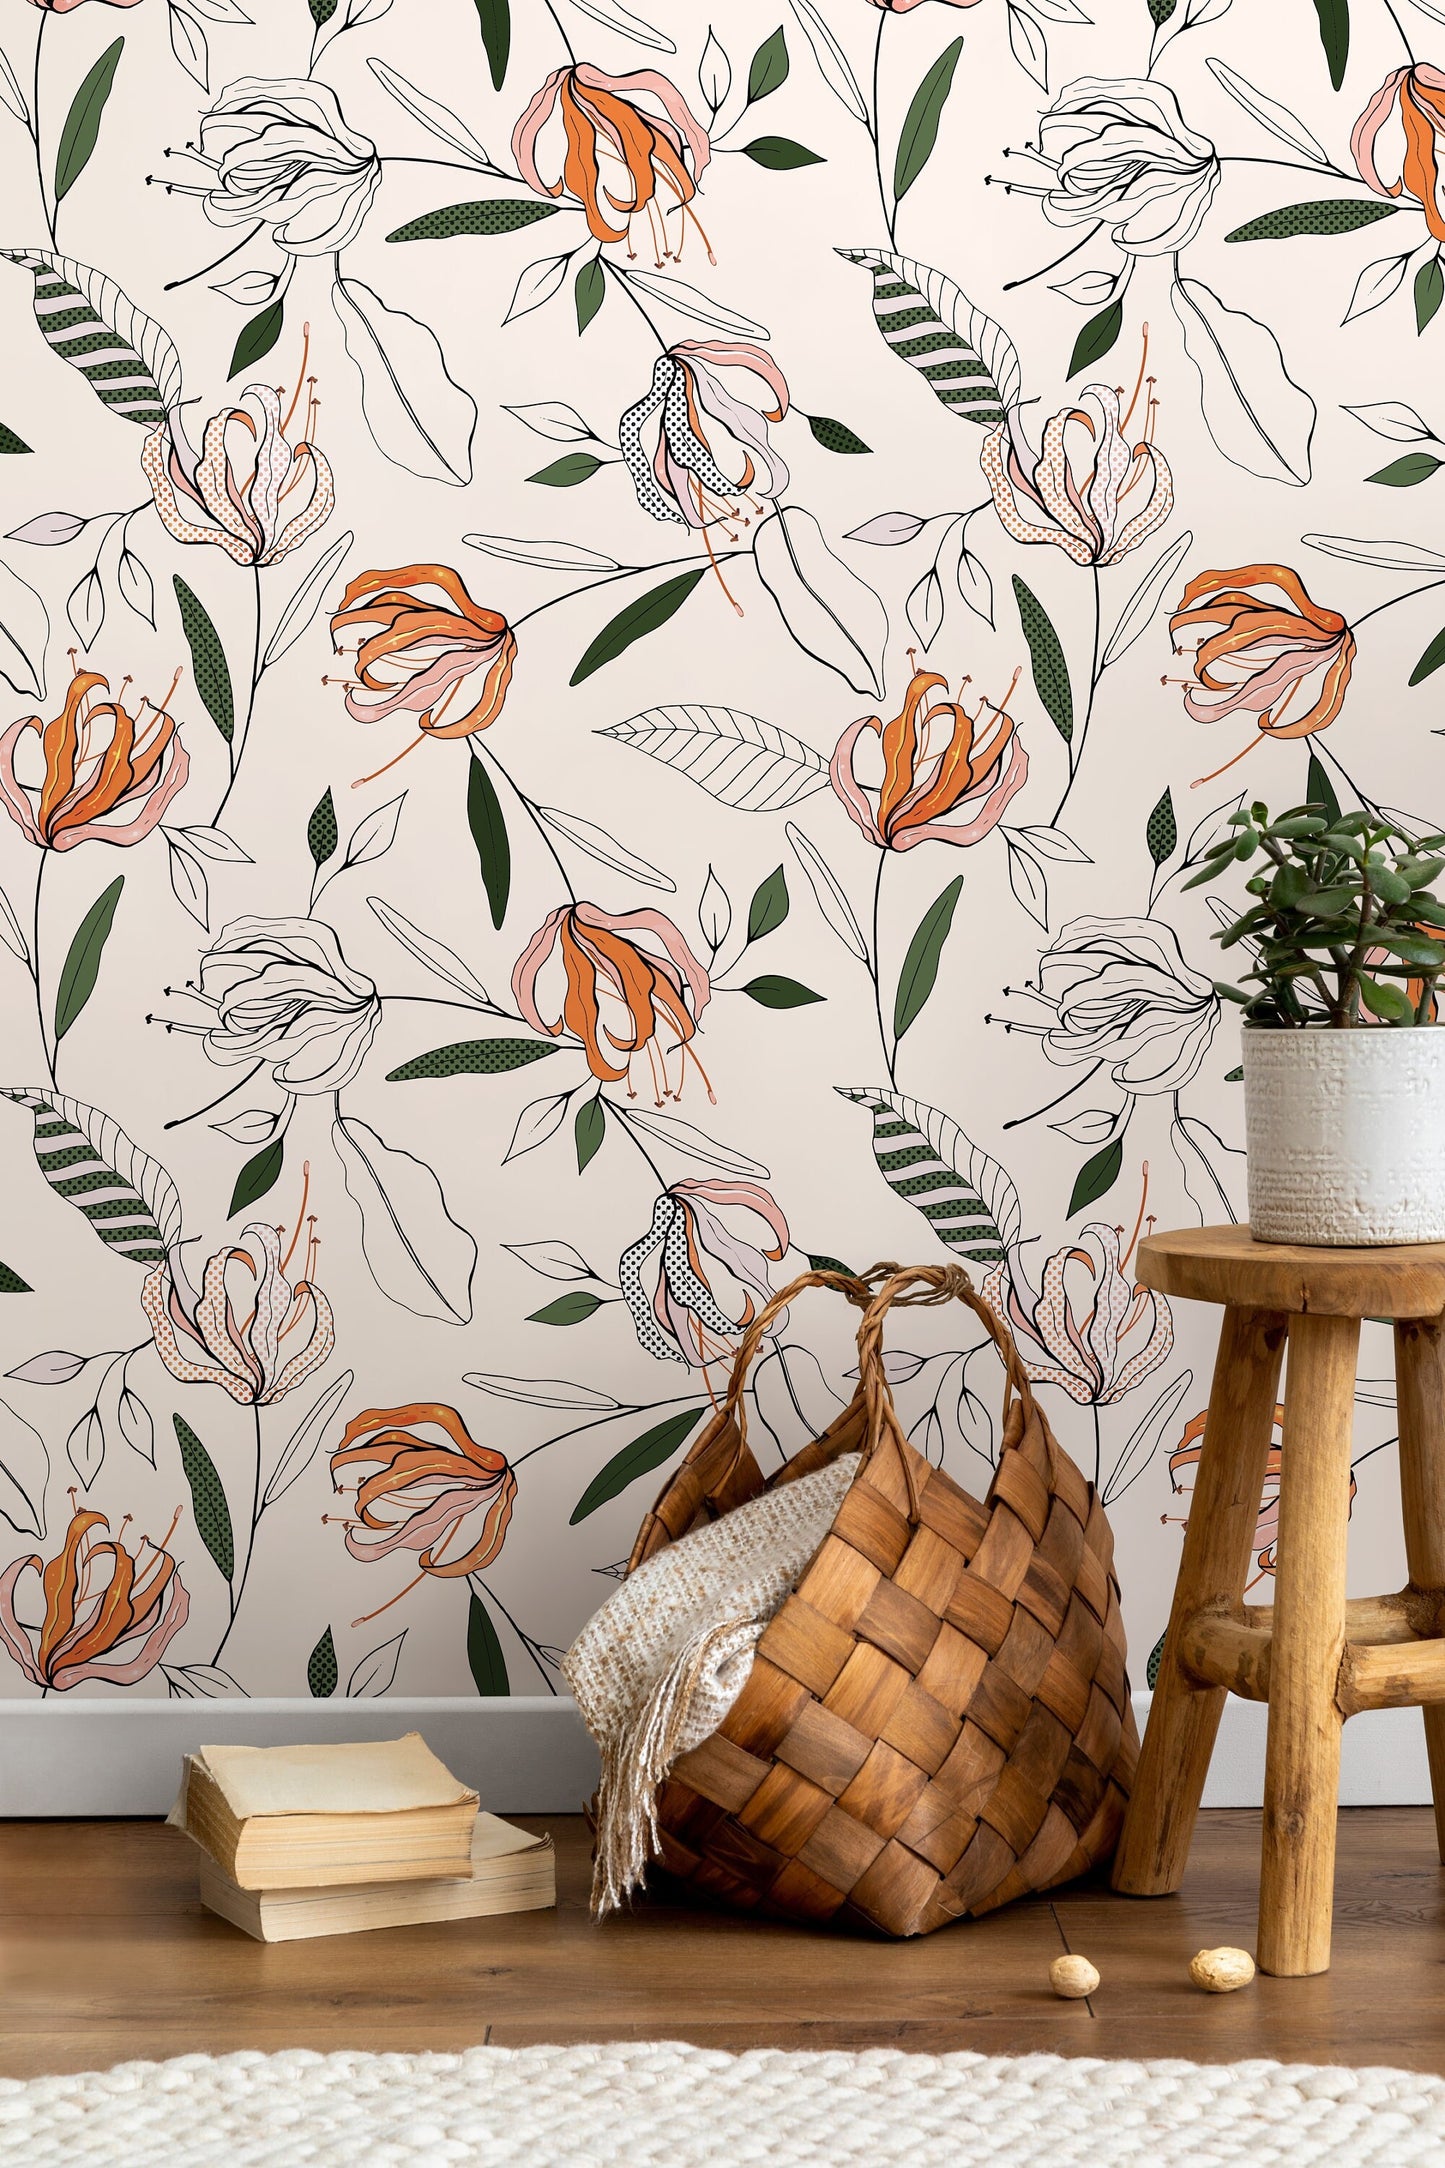 Boho Lily Flower Wallpaper / Peel and Stick Wallpaper Removable Wallpaper Home Decor Wall Art Wall Decor Room Decor - D199